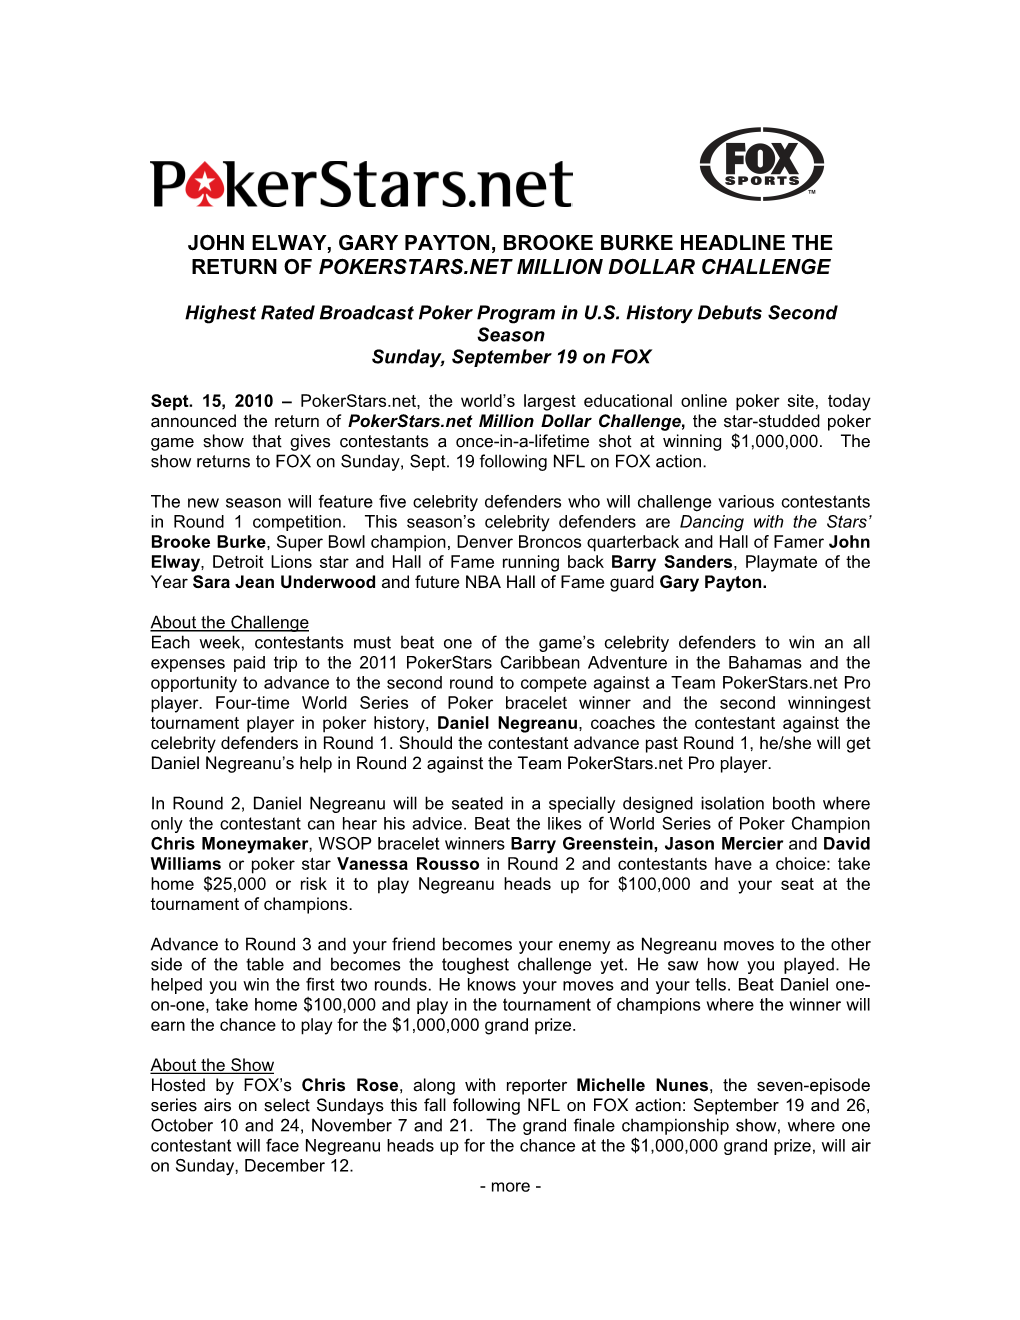 John Elway, Gary Payton, Brooke Burke Headline the Return of Pokerstars.Net Million Dollar Challenge